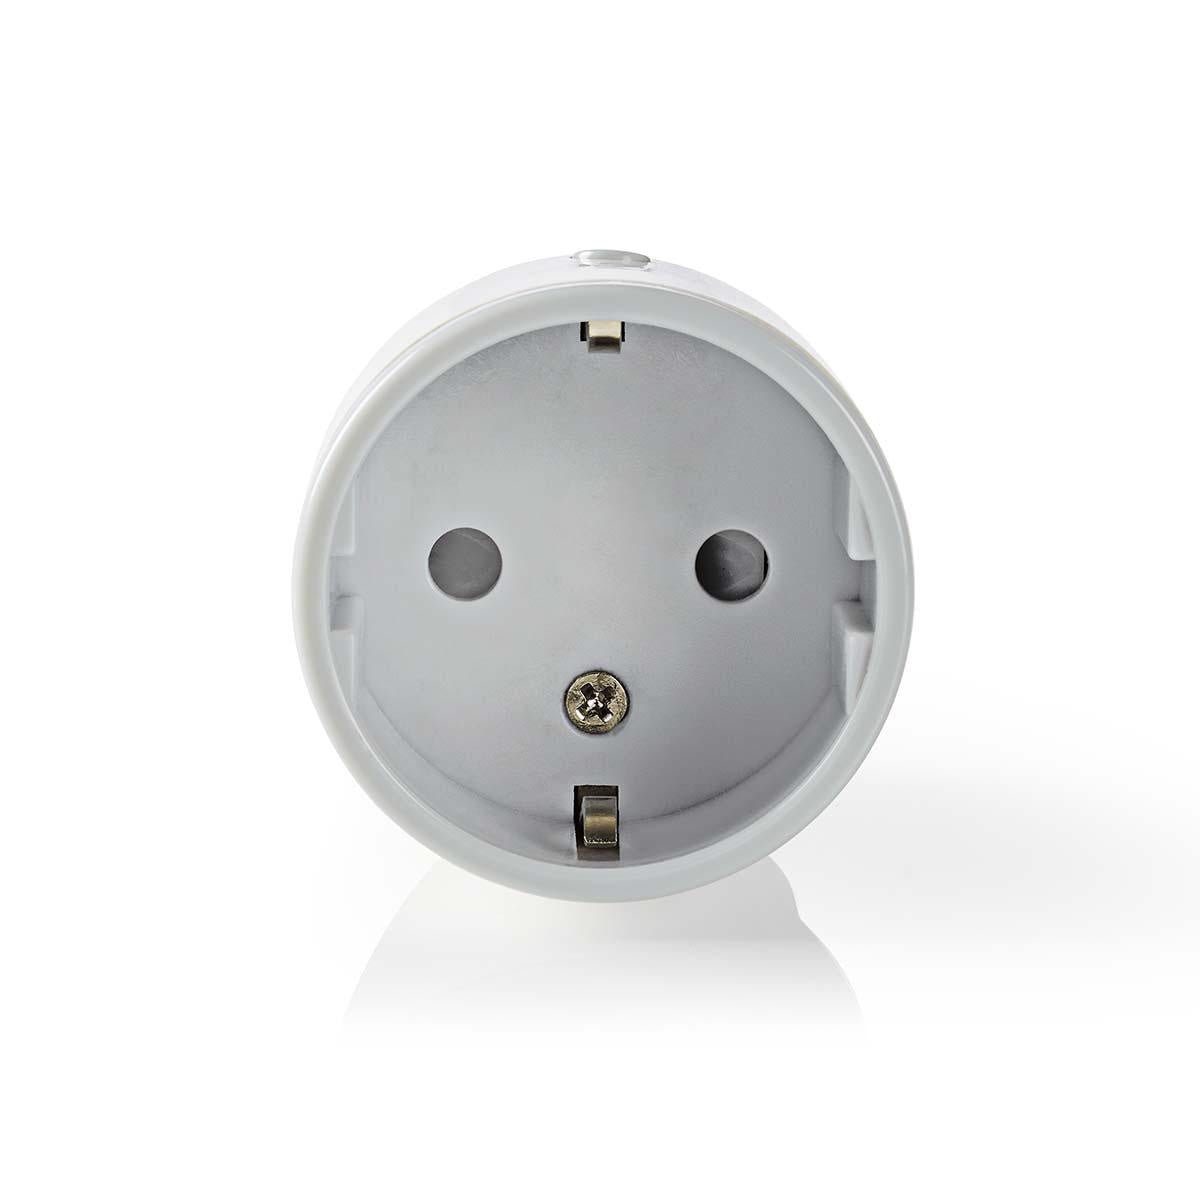 Wi-Fi smart plug | Stroommeter | Schuko type F | 10A - alarmsysteemexpert.nl